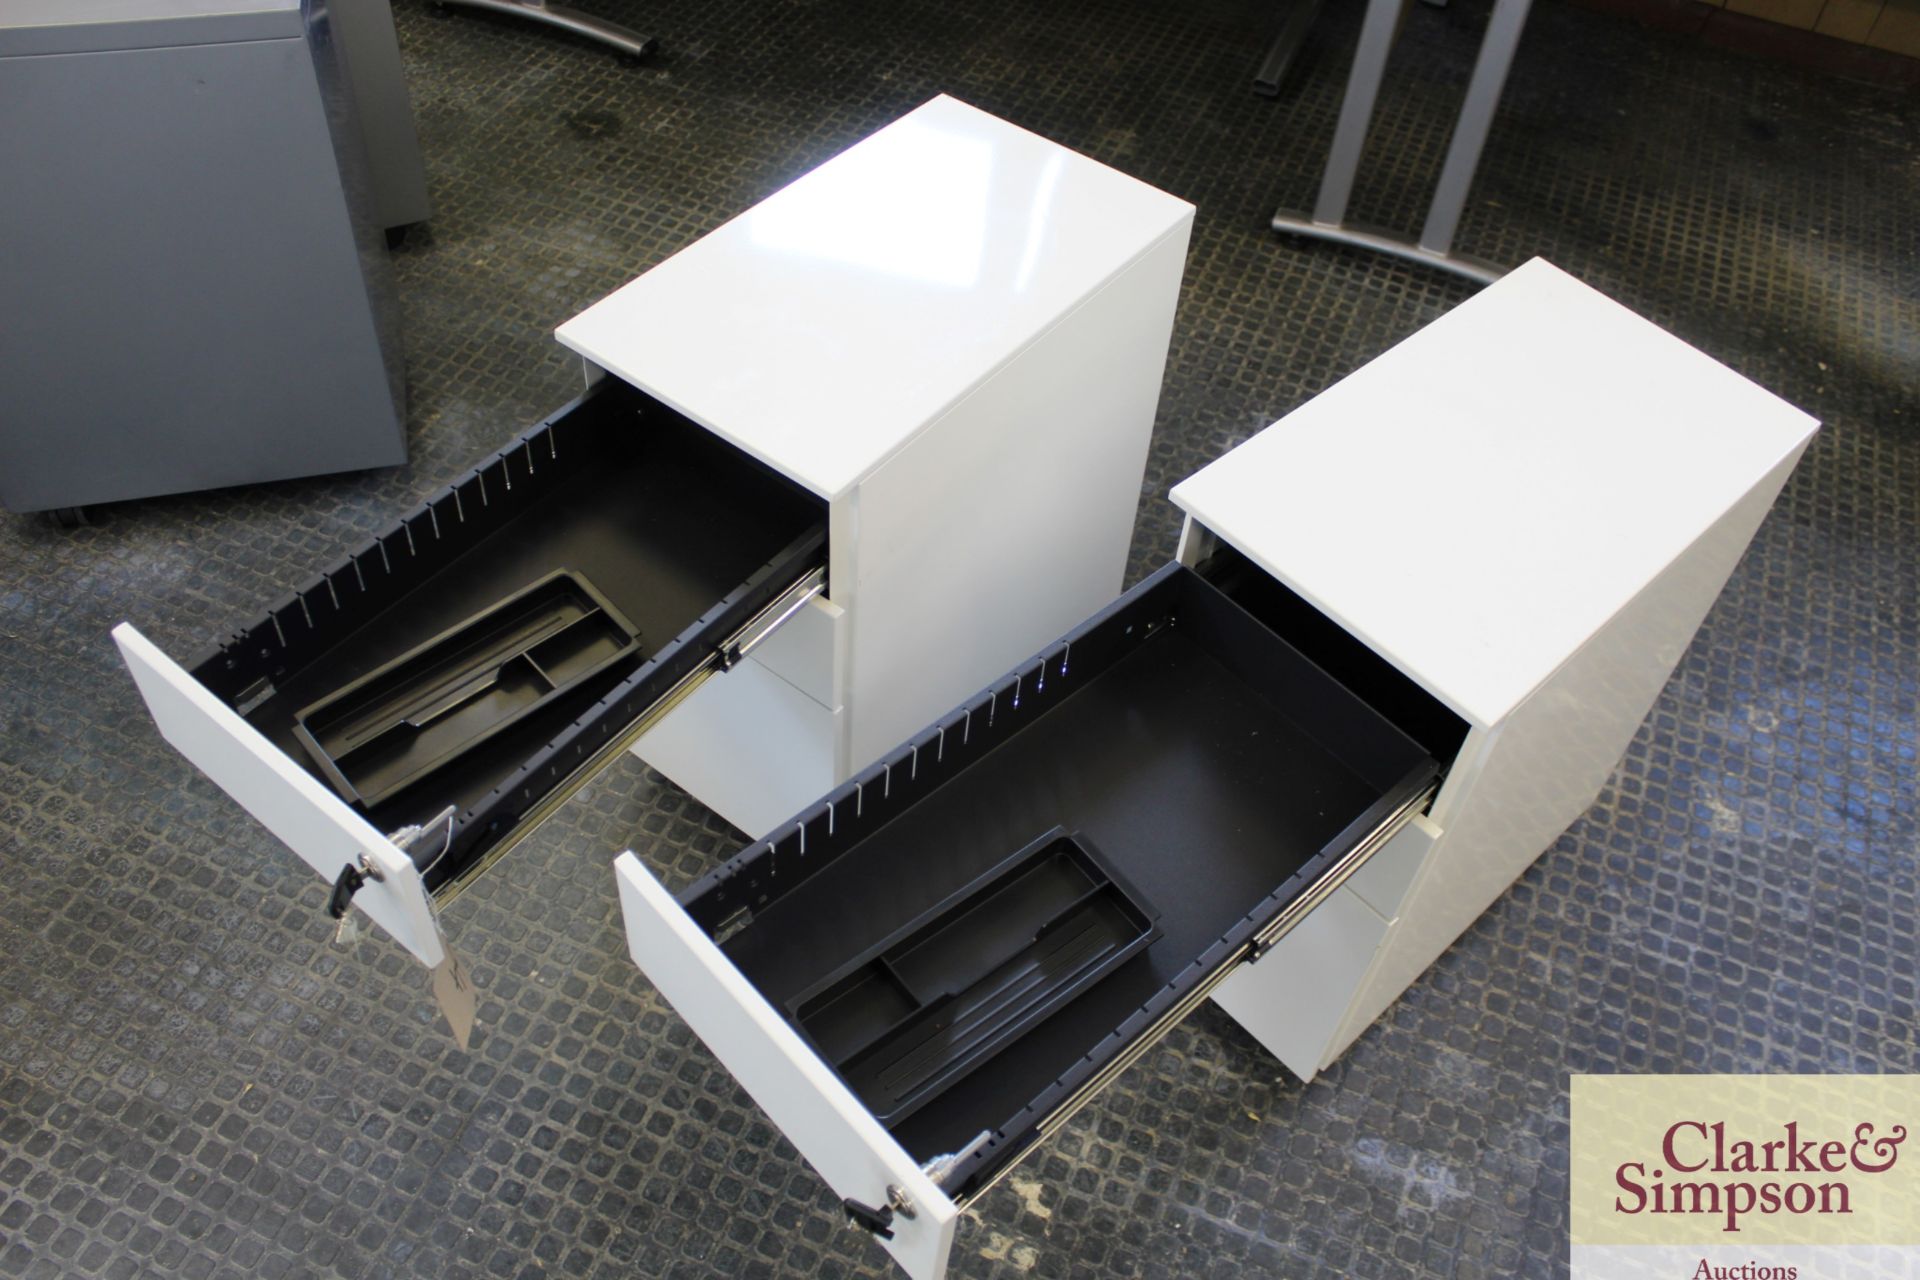 2x white metal 3 drawer desk pedestals. With keys. - Image 4 of 4